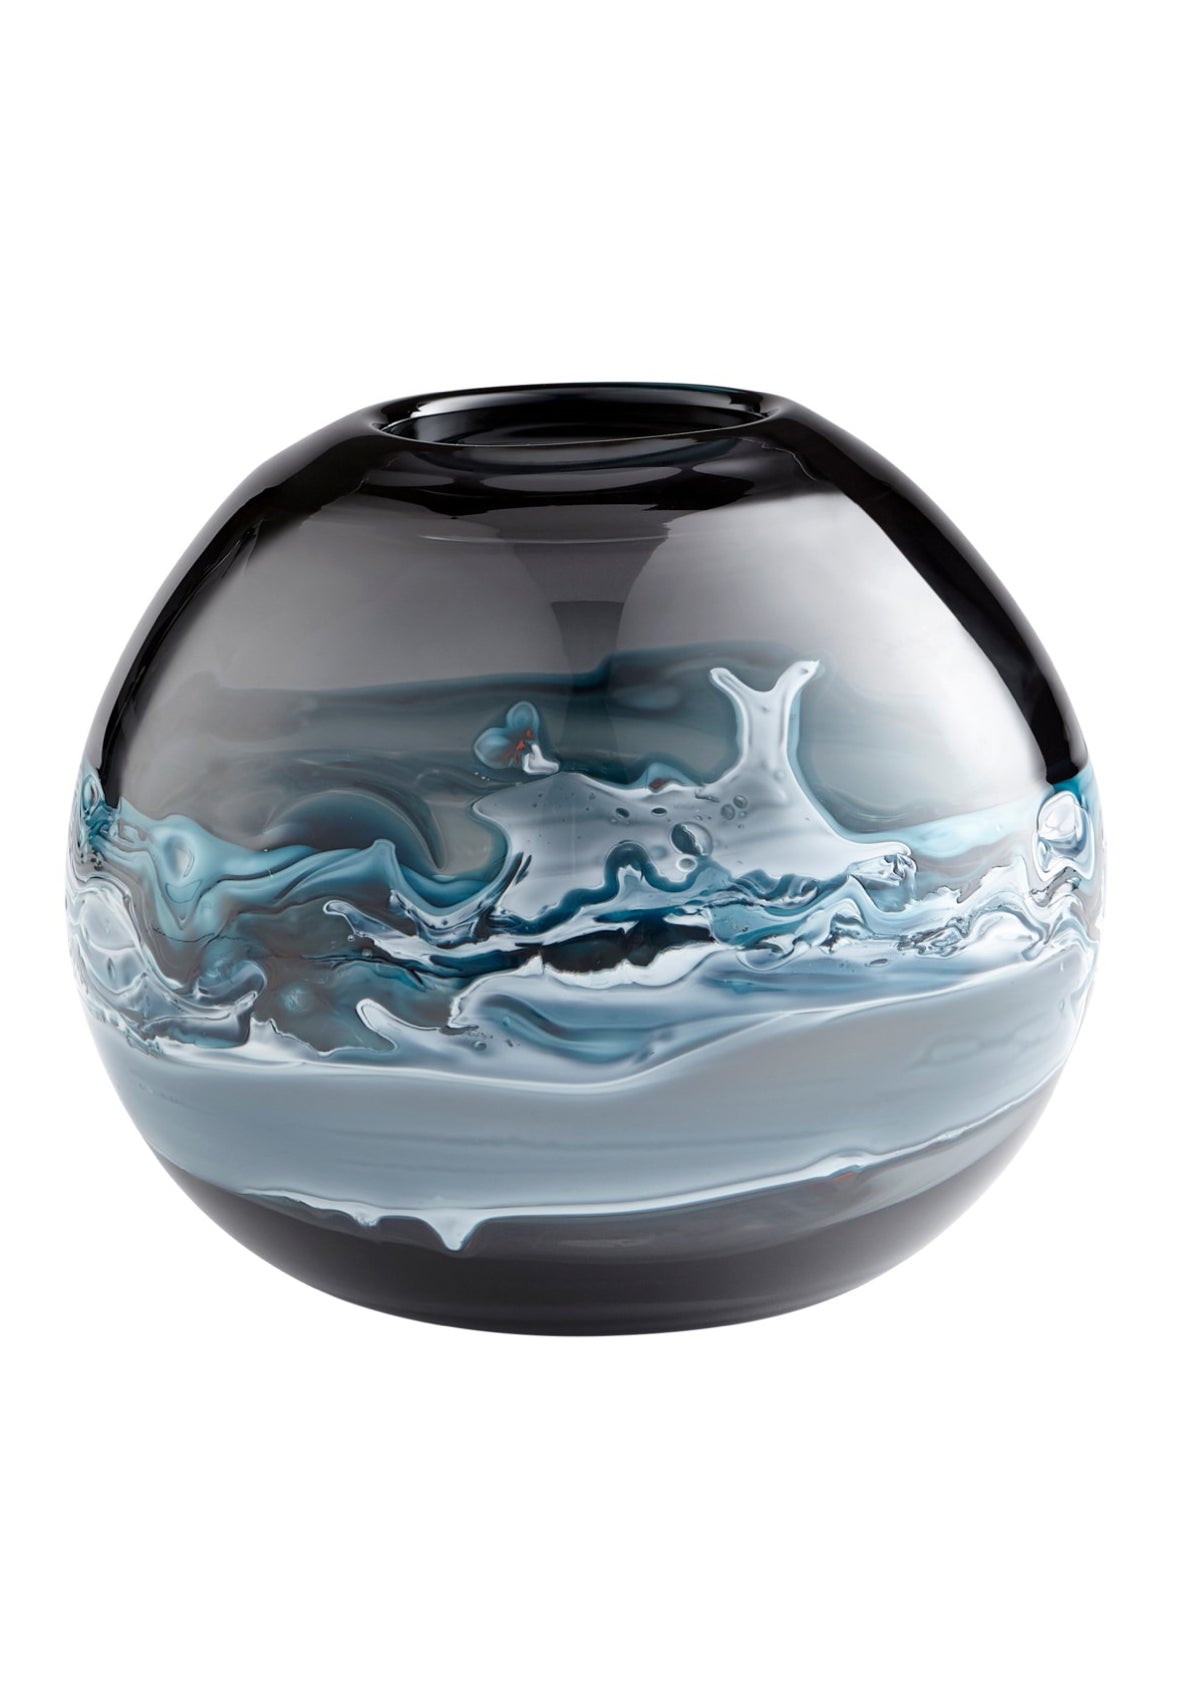 Round Swirled Blue Vase- Mescolare Vase